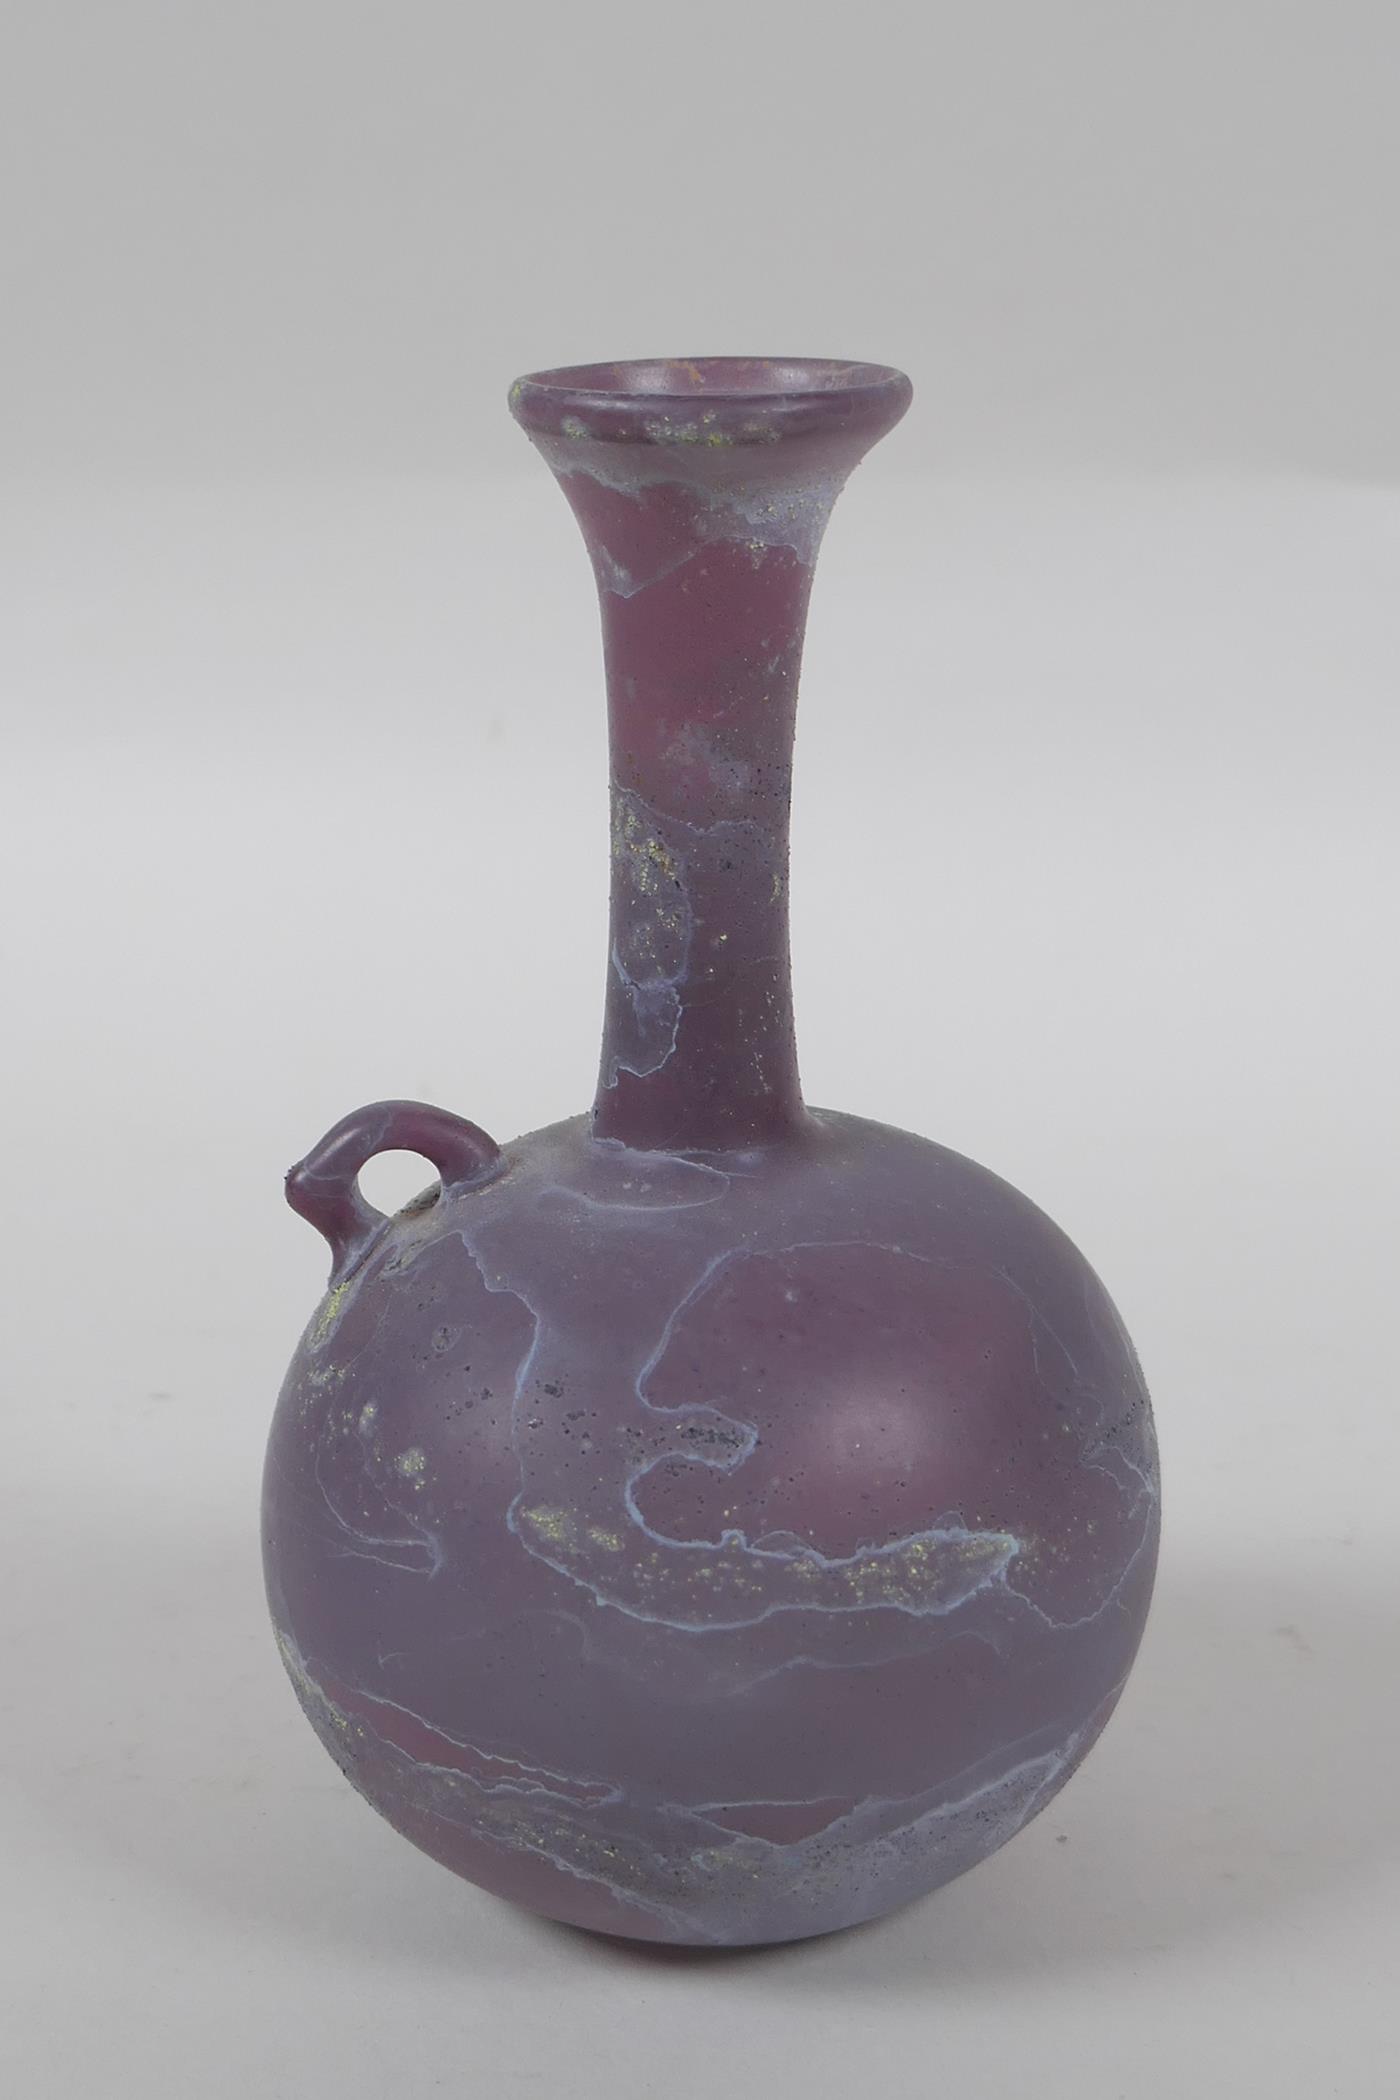 An antique purple glass bottle, 14cm high - Image 3 of 4